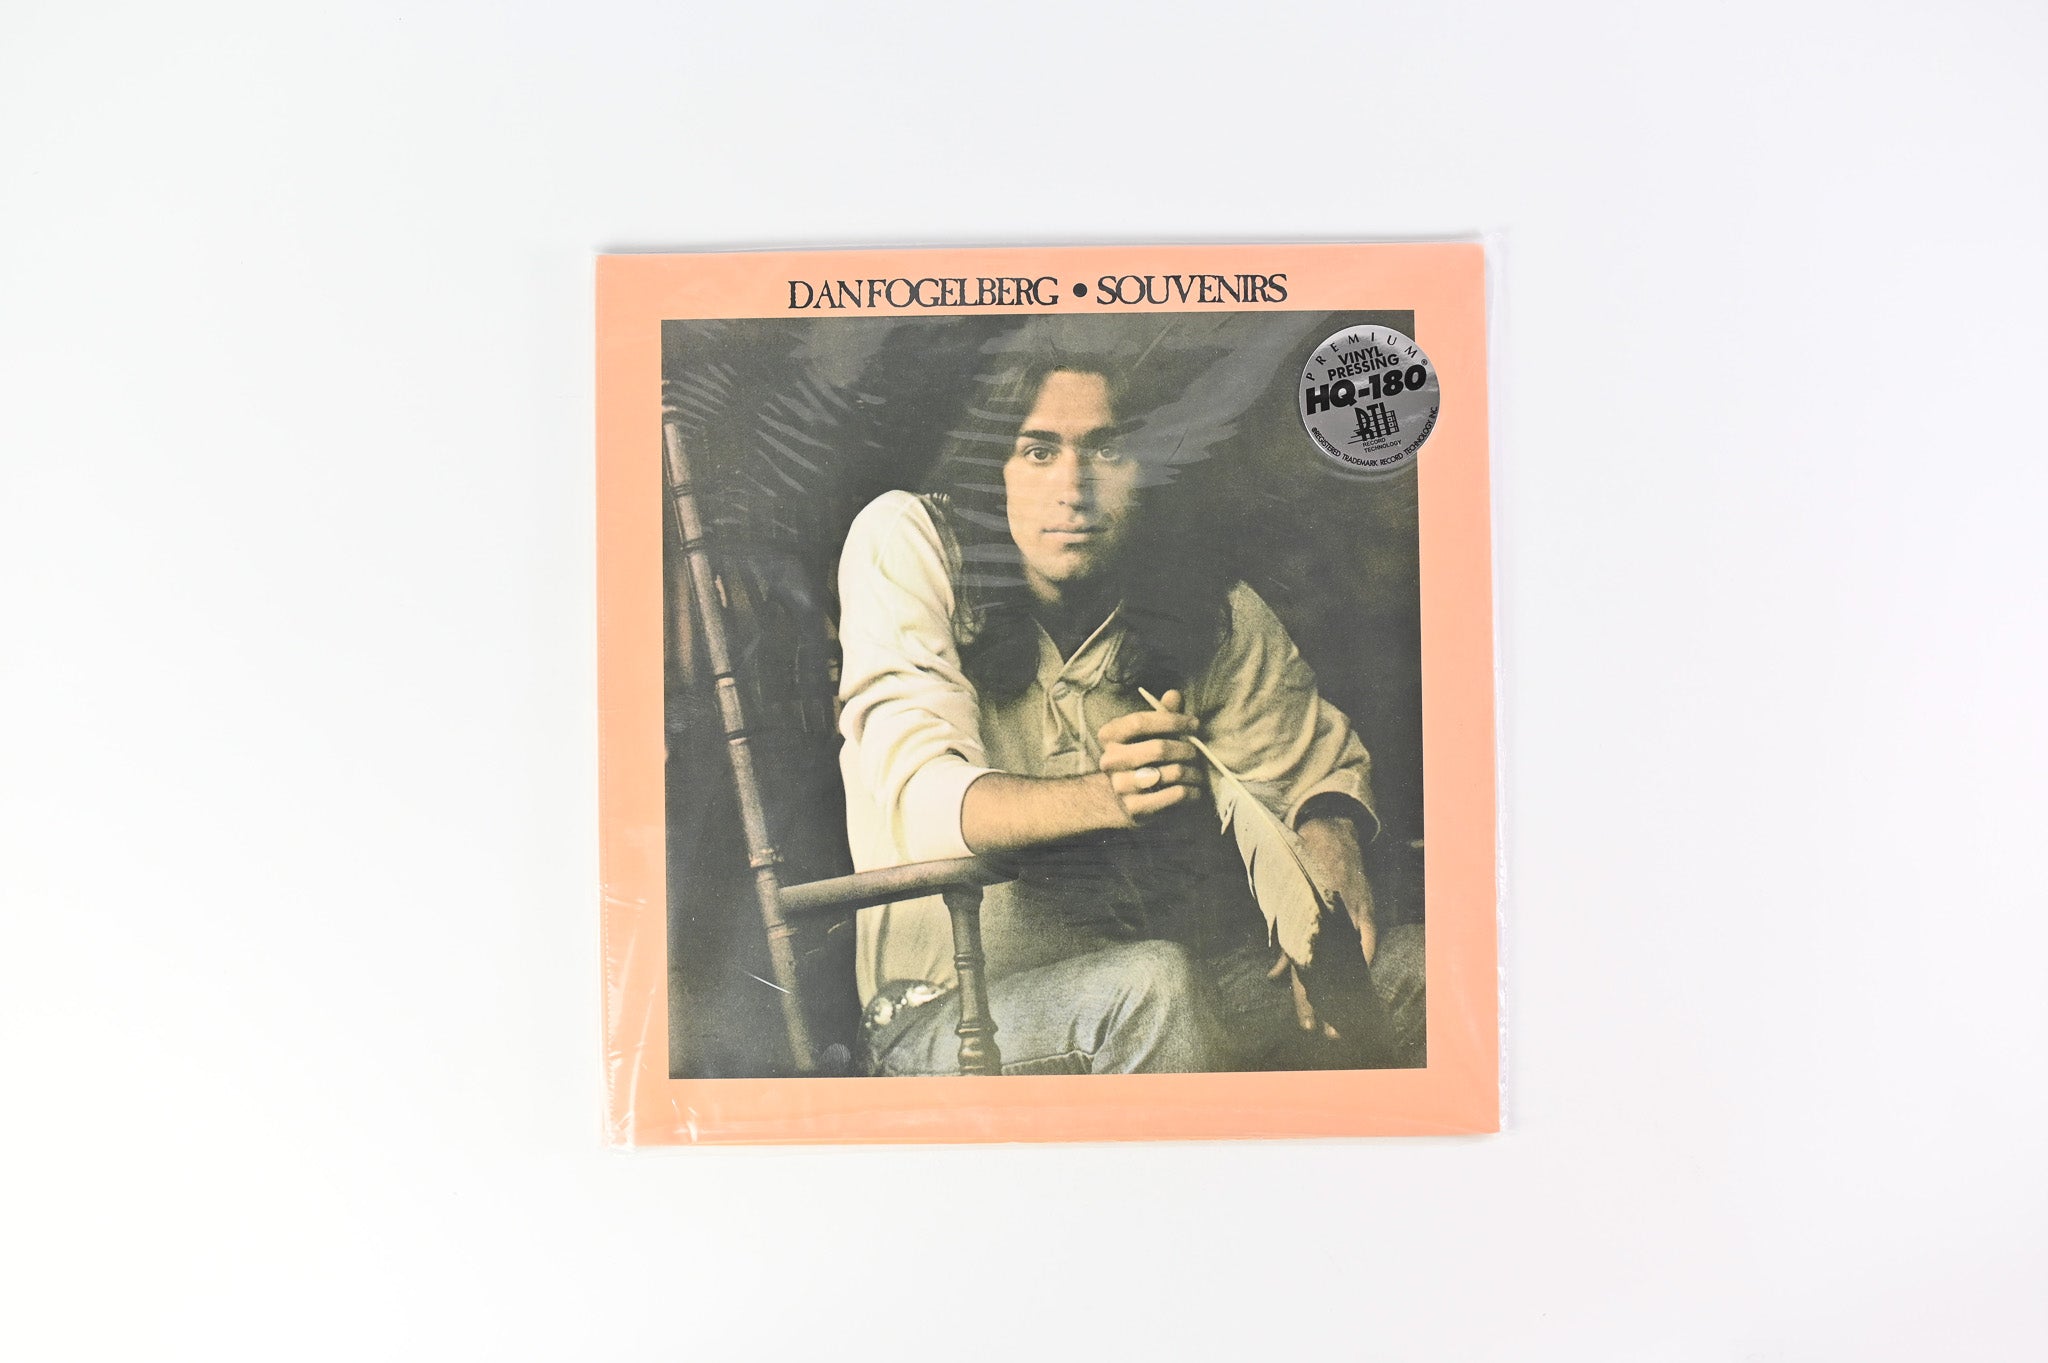 Dan Fogelberg - Souvenirs on Friday Music Remastered Reissue Blue Vinyl